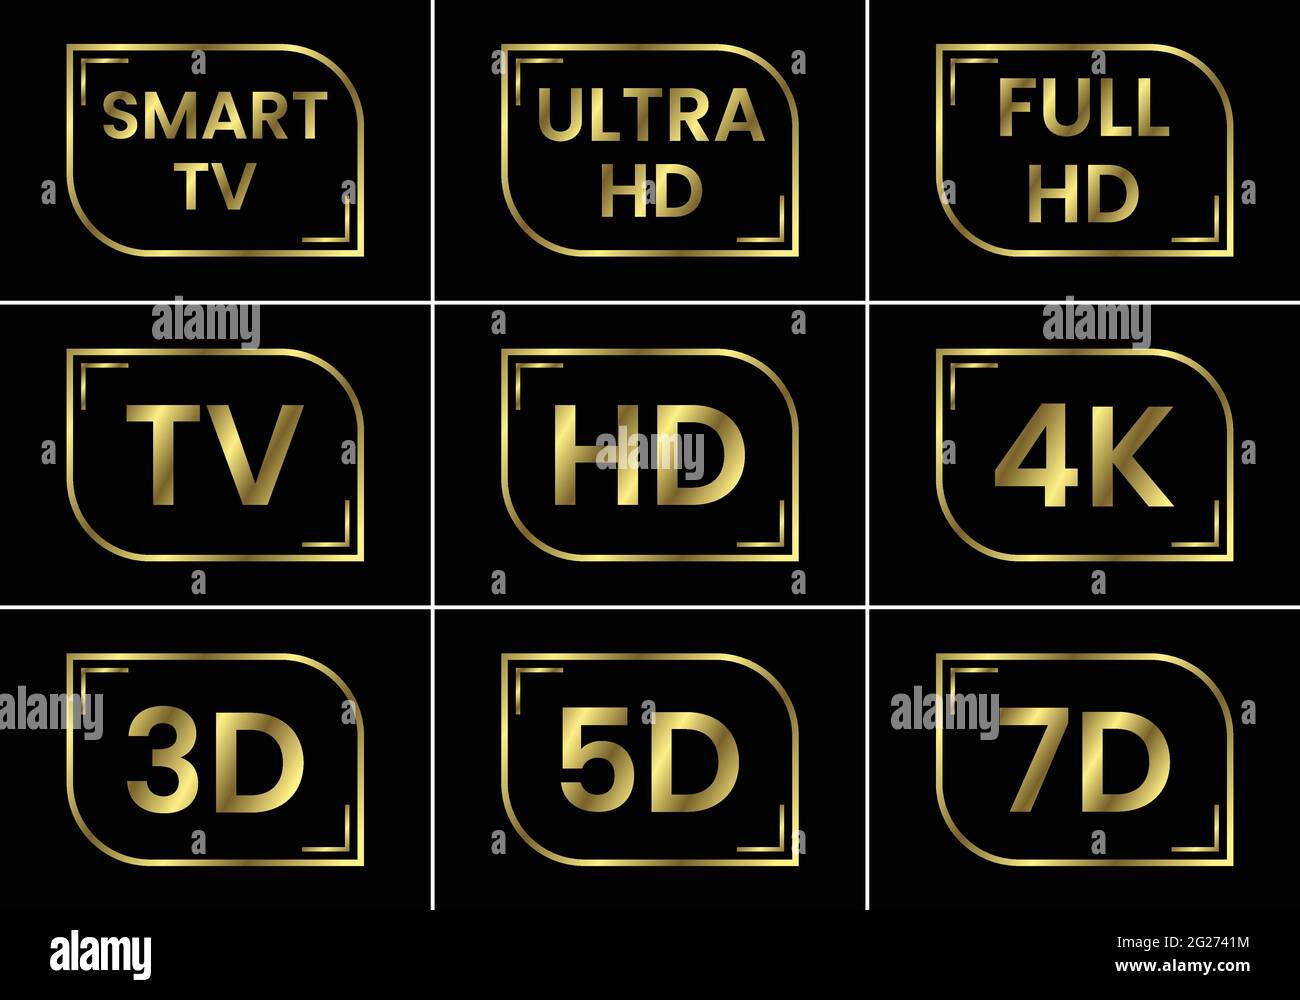 Golden TV icon set. TV labels TV HD 3D 5D 7D Smart TV Full HD 4K Ultra HD Stock Vector